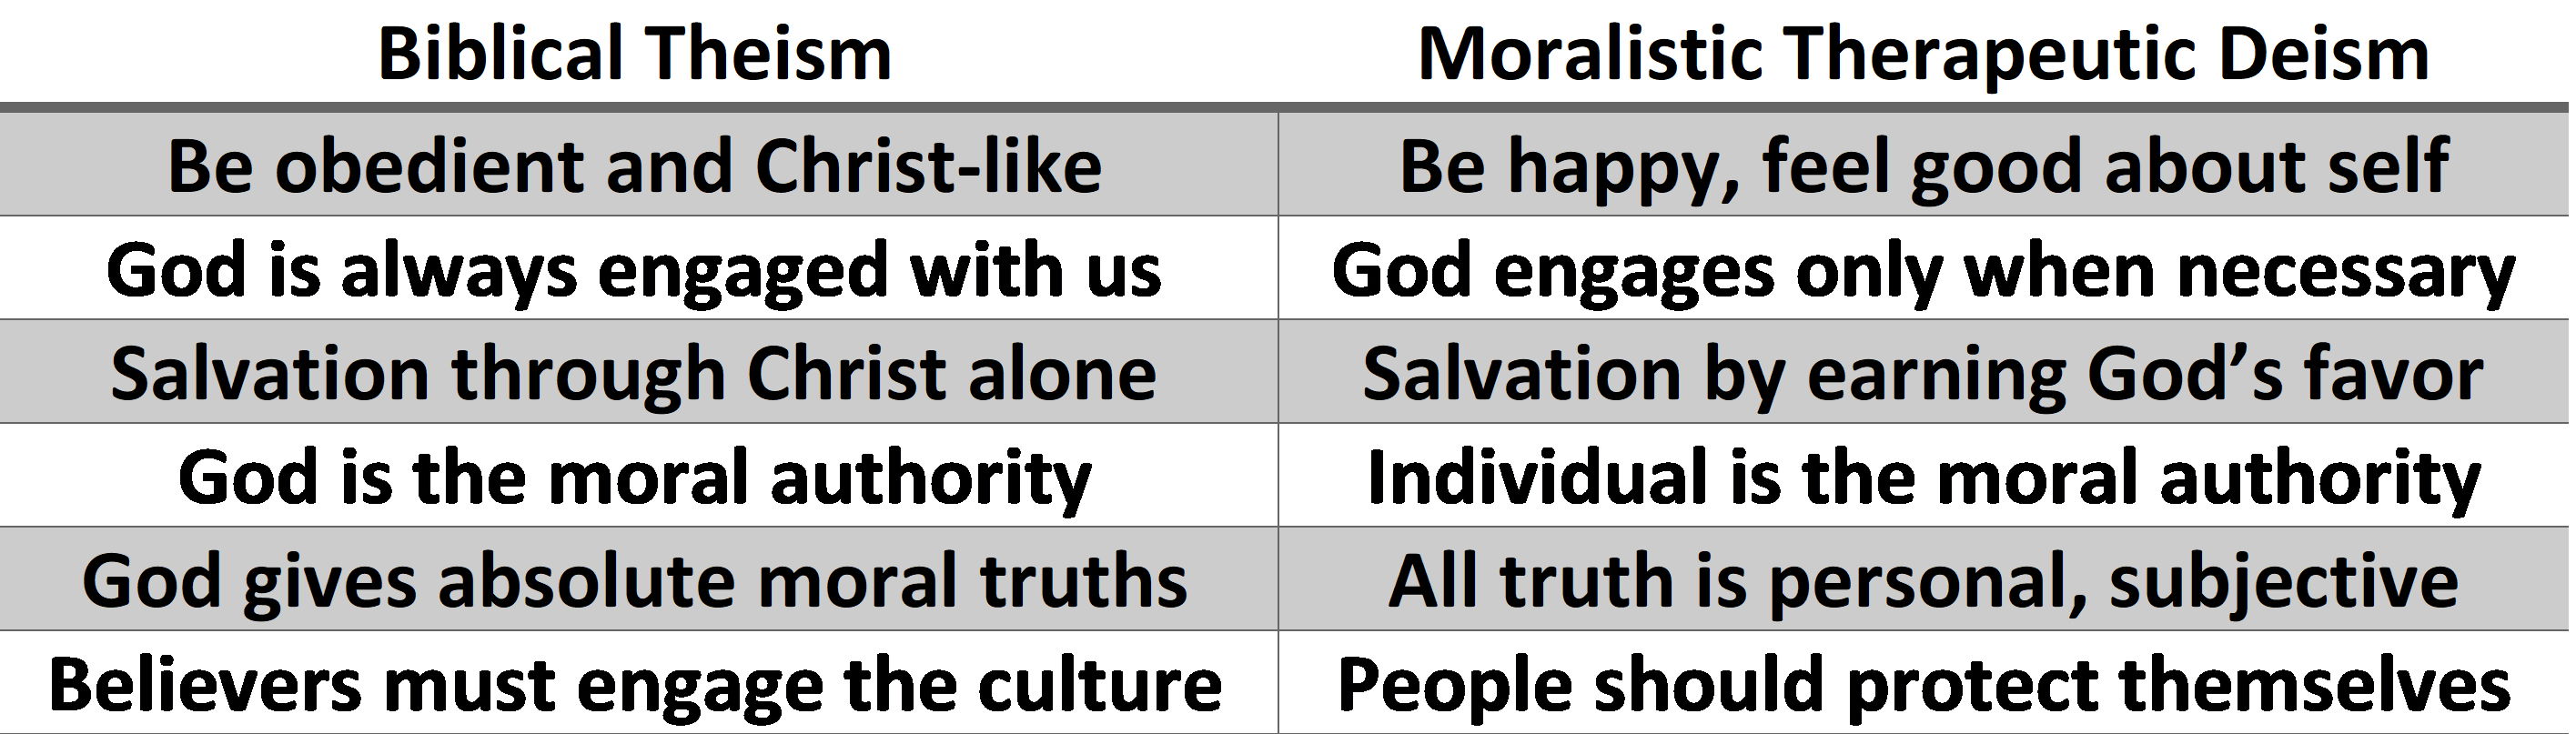 Biblical theism vs moralistic therapeutic deism